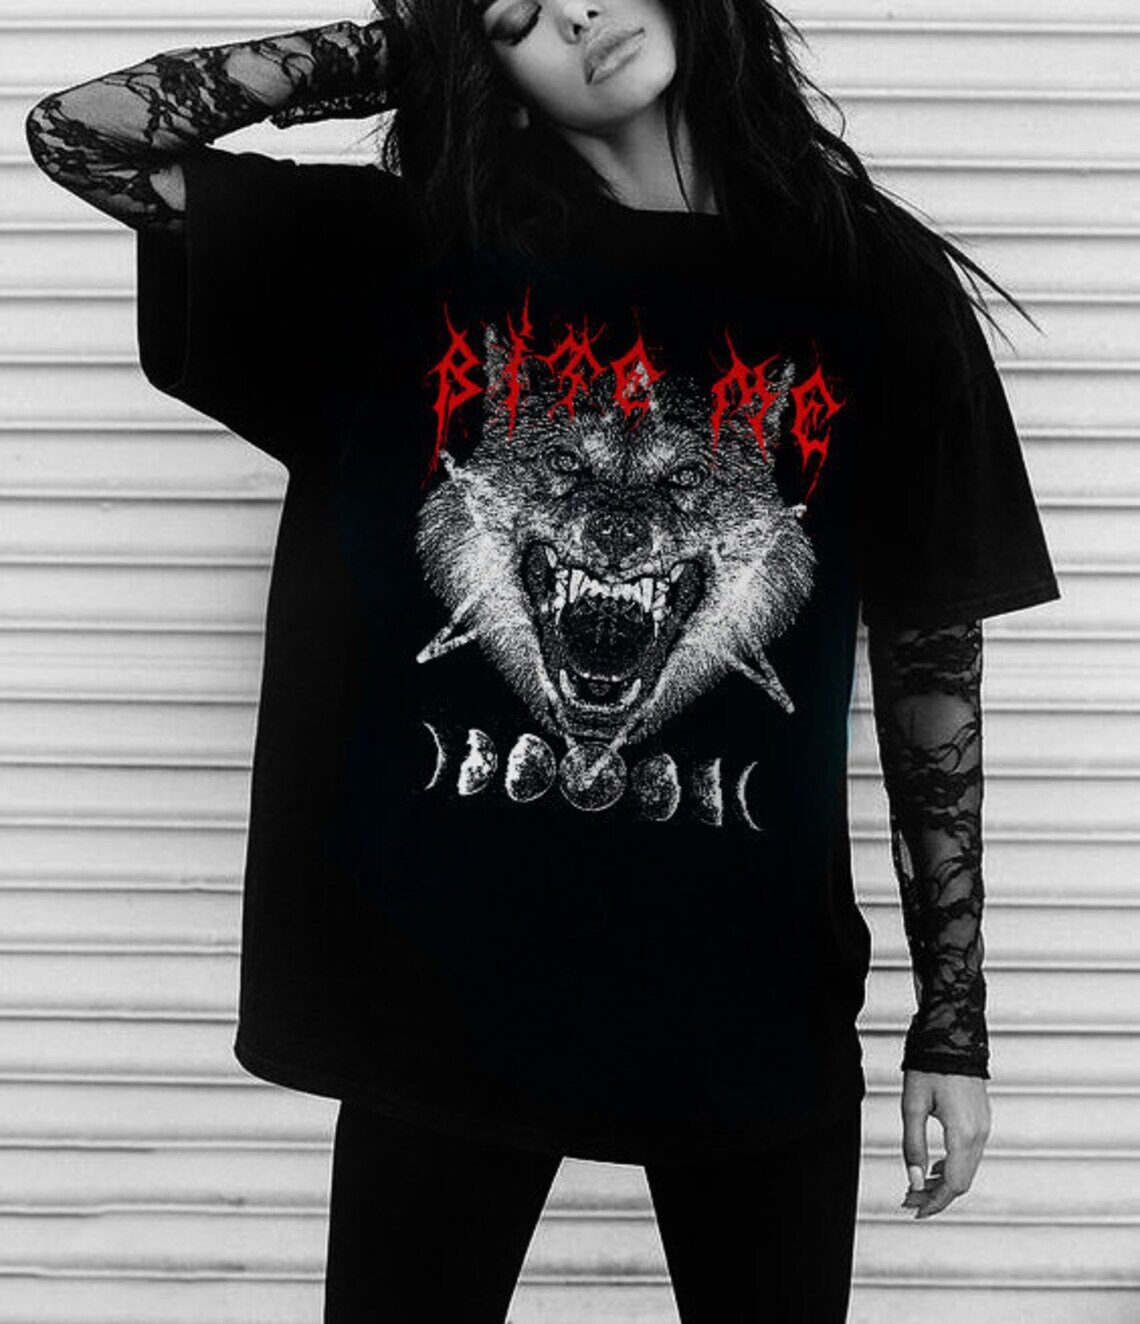 Alternative Nu Goth Clothing Women, Men Goth Aesthetic 666 Skull T-shirt 